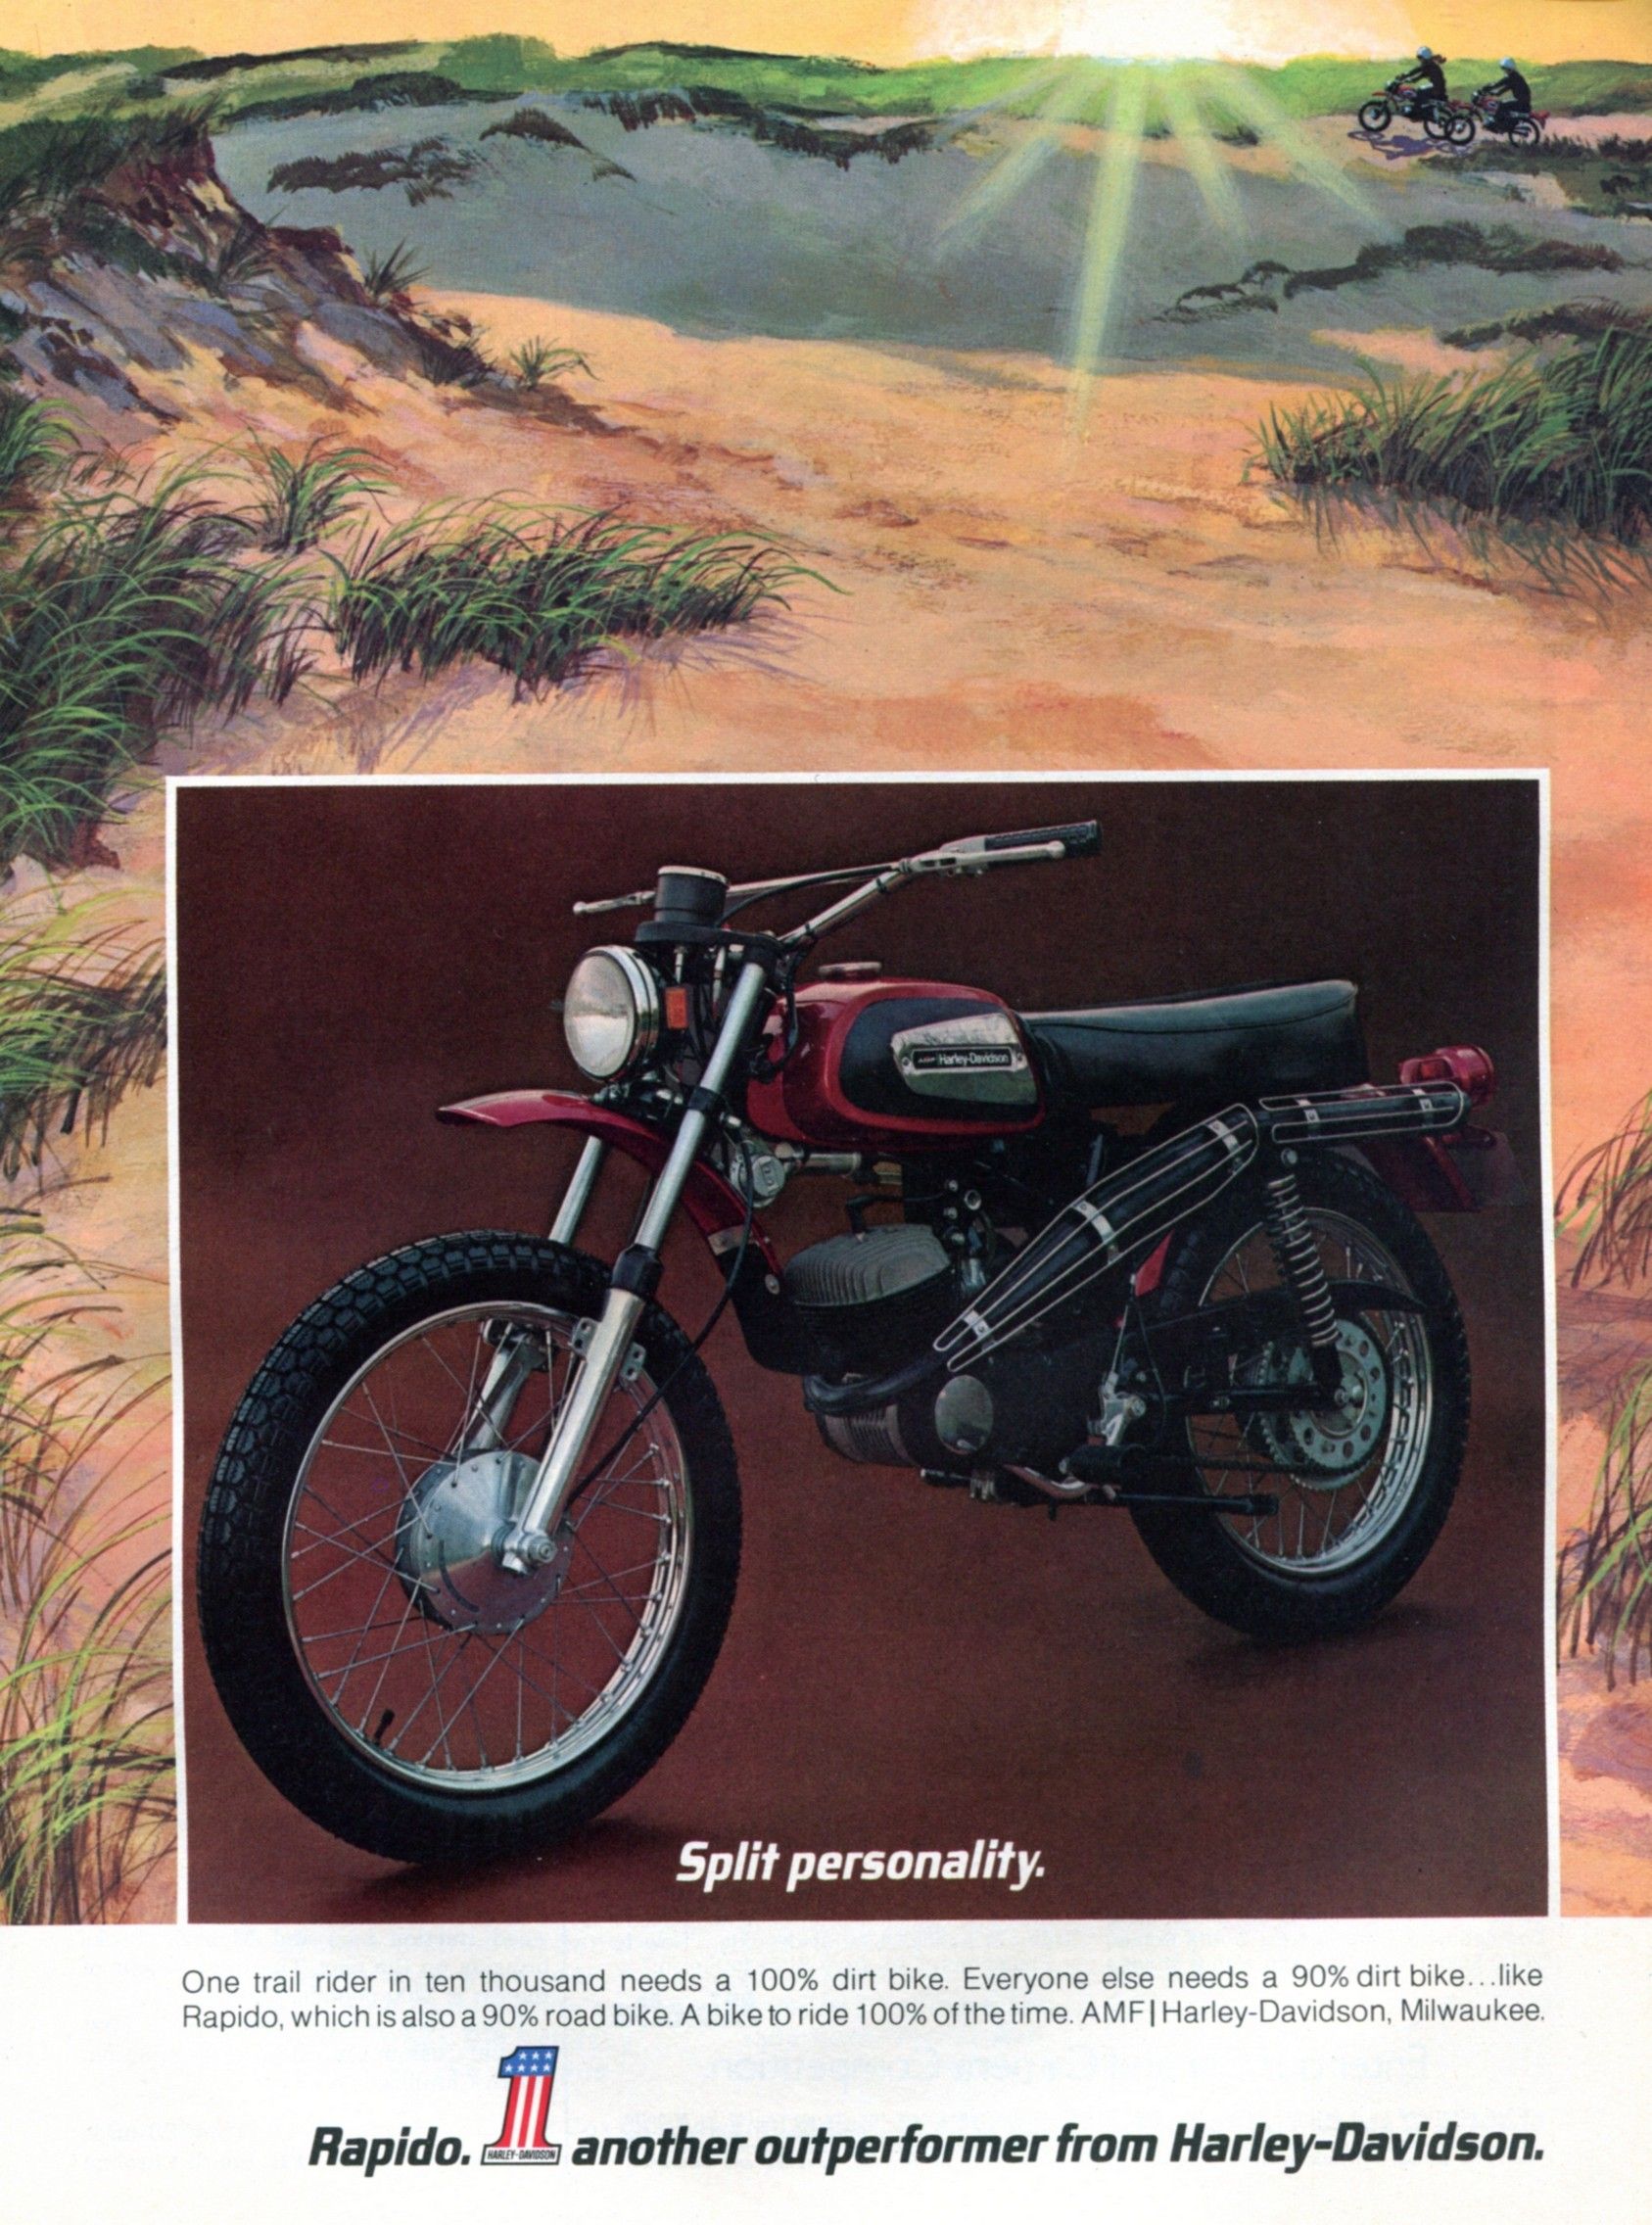 Aermacchi/AMF Harley Davidson advertisement